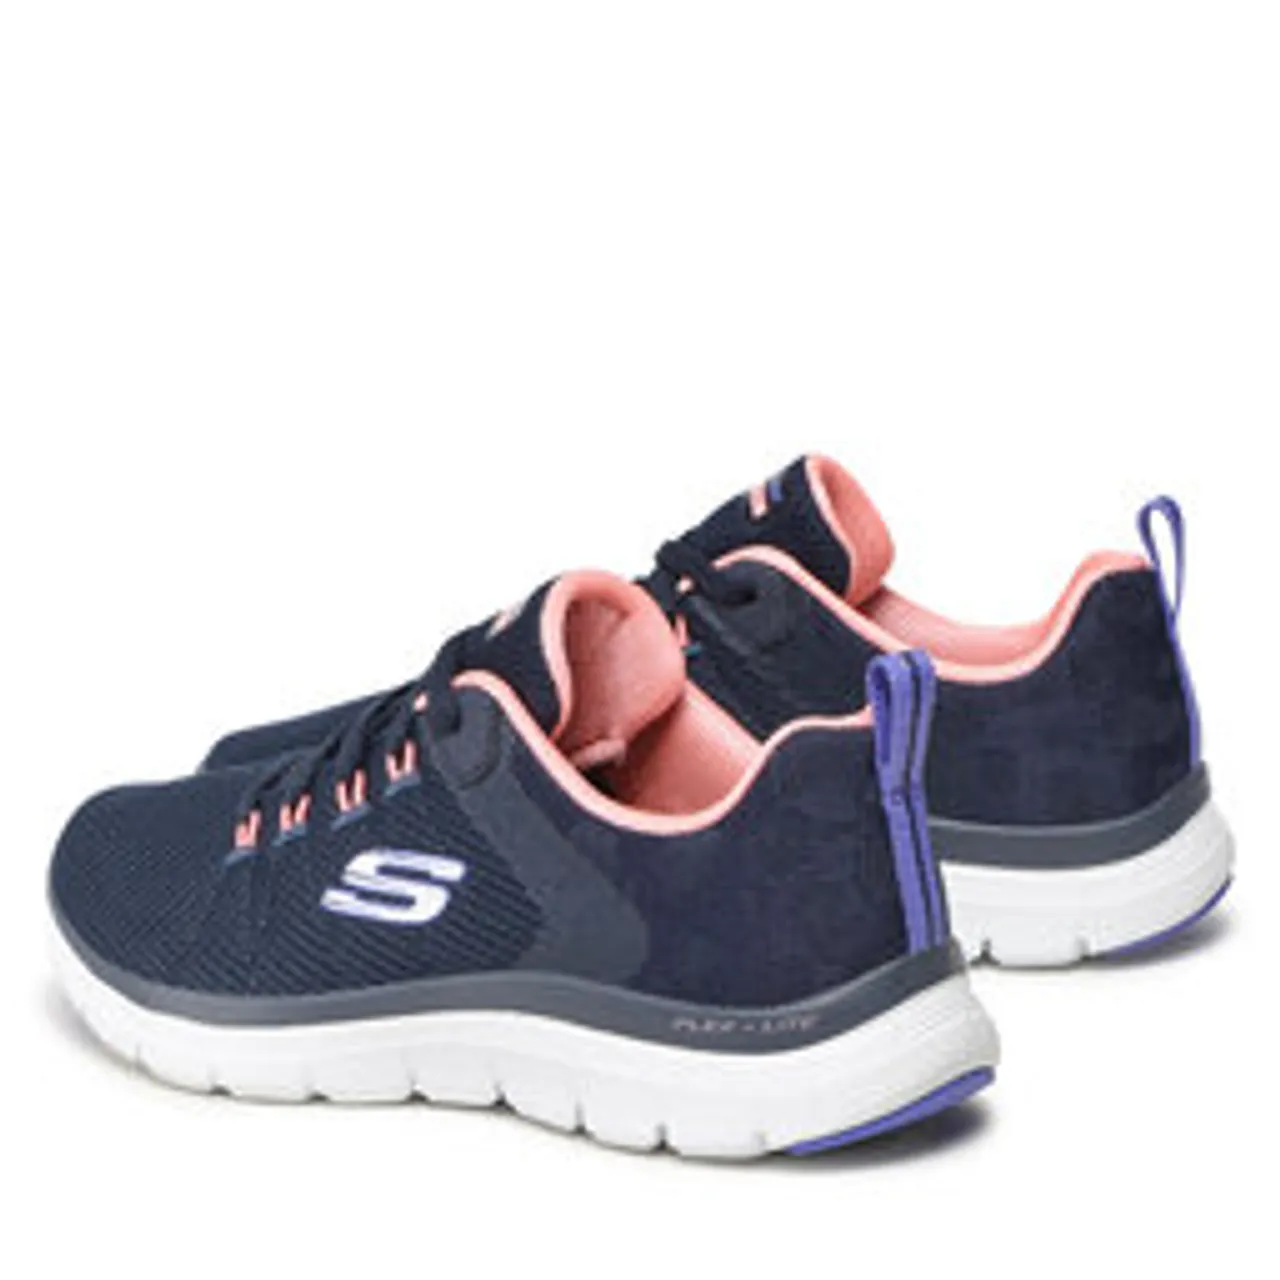 Schuhe Skechers Elegant Ways 149580 Navy/Multi